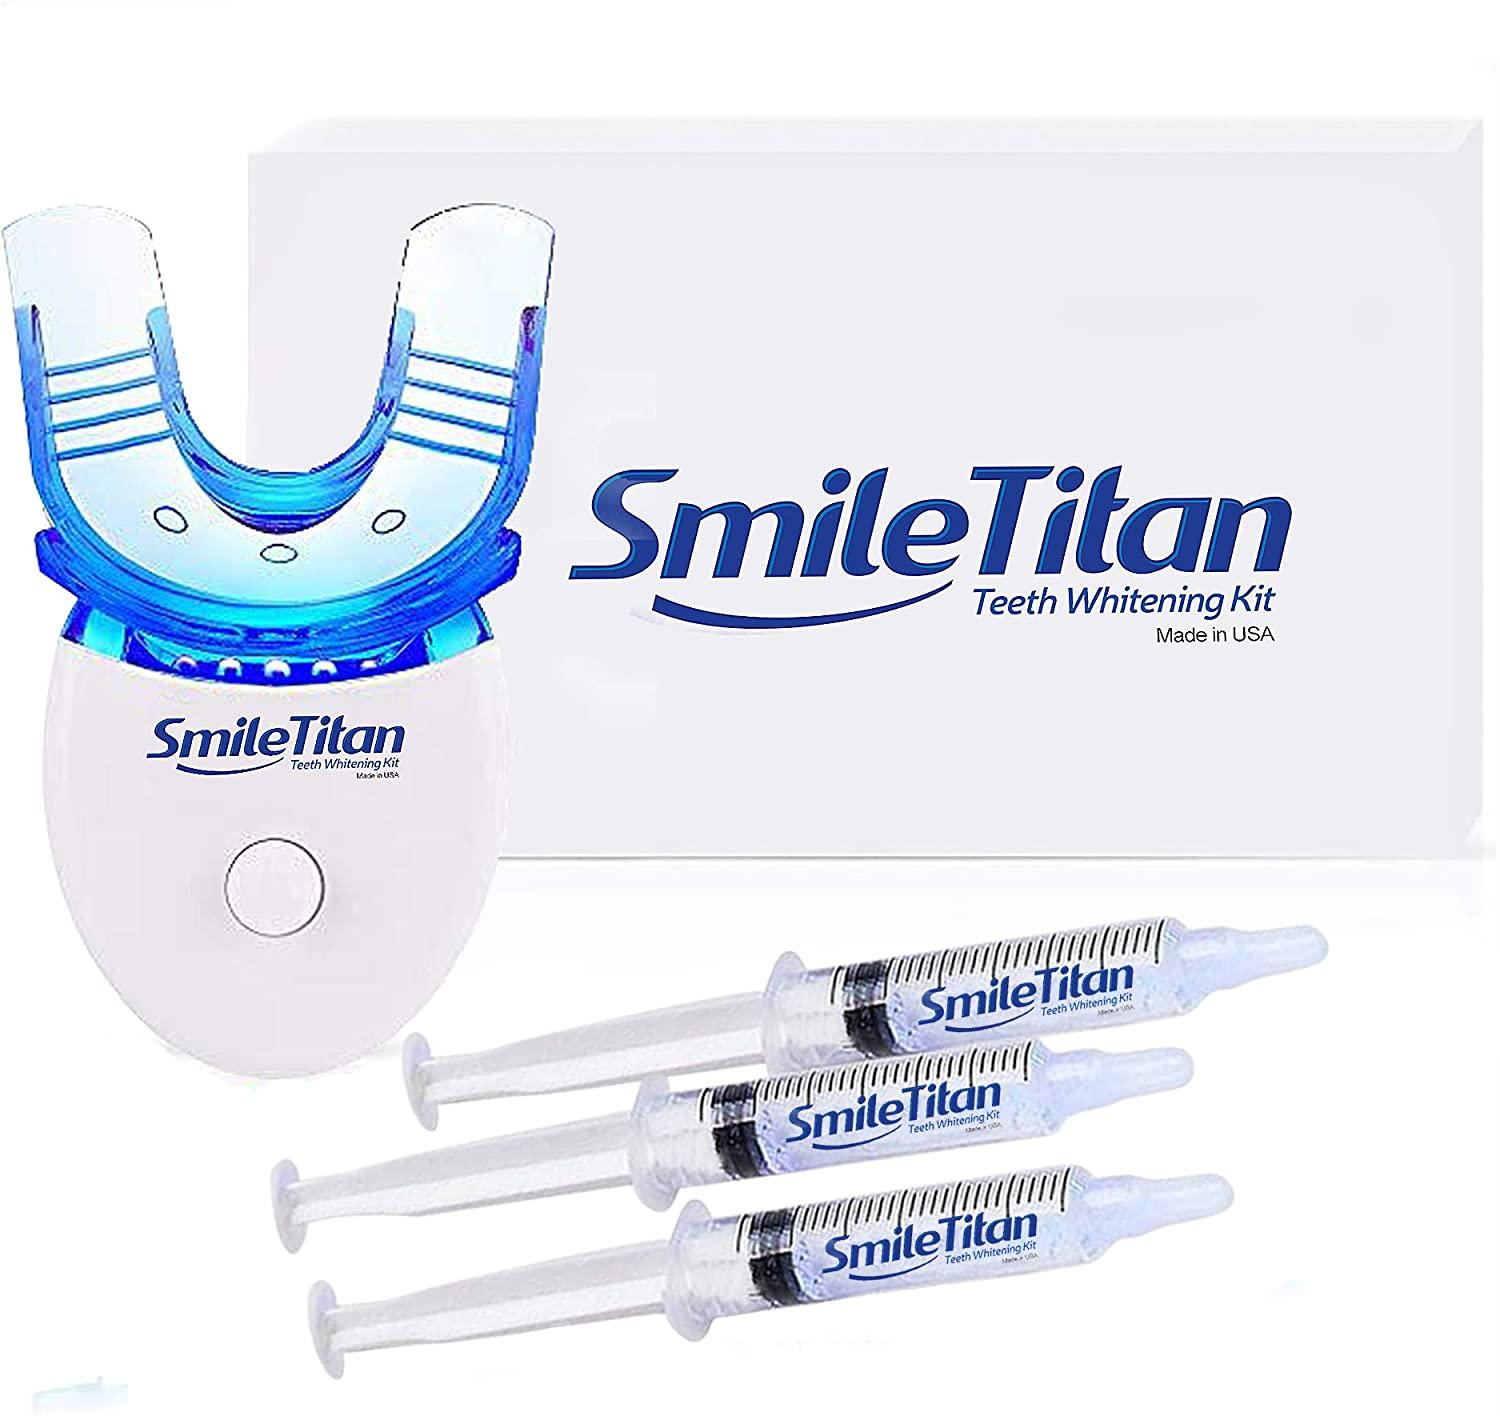 Smile Titan Teeth Whitening Kit for $9.99 Shipped